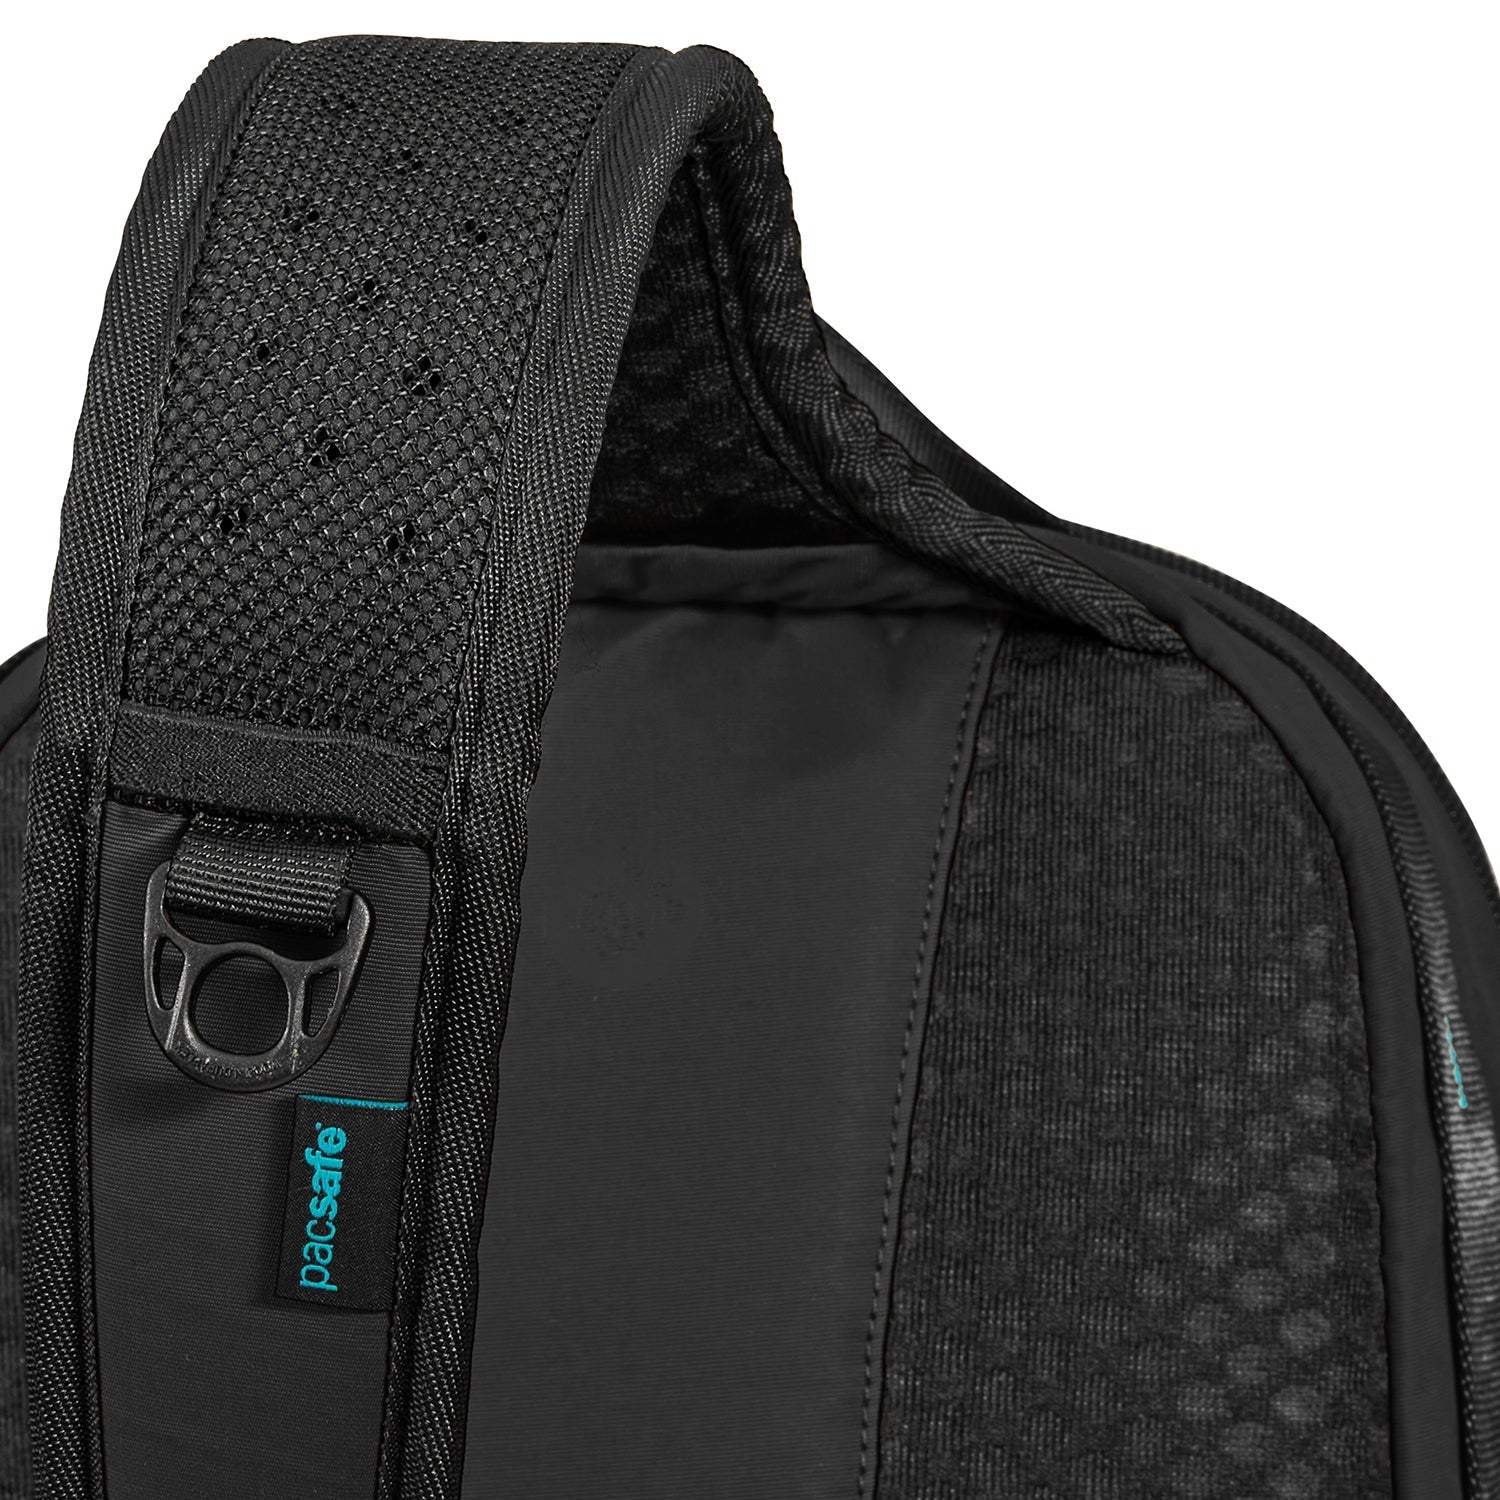 Pacsafe Eco 12L Anti-Theft Sling Bag Review and Walkthrough 